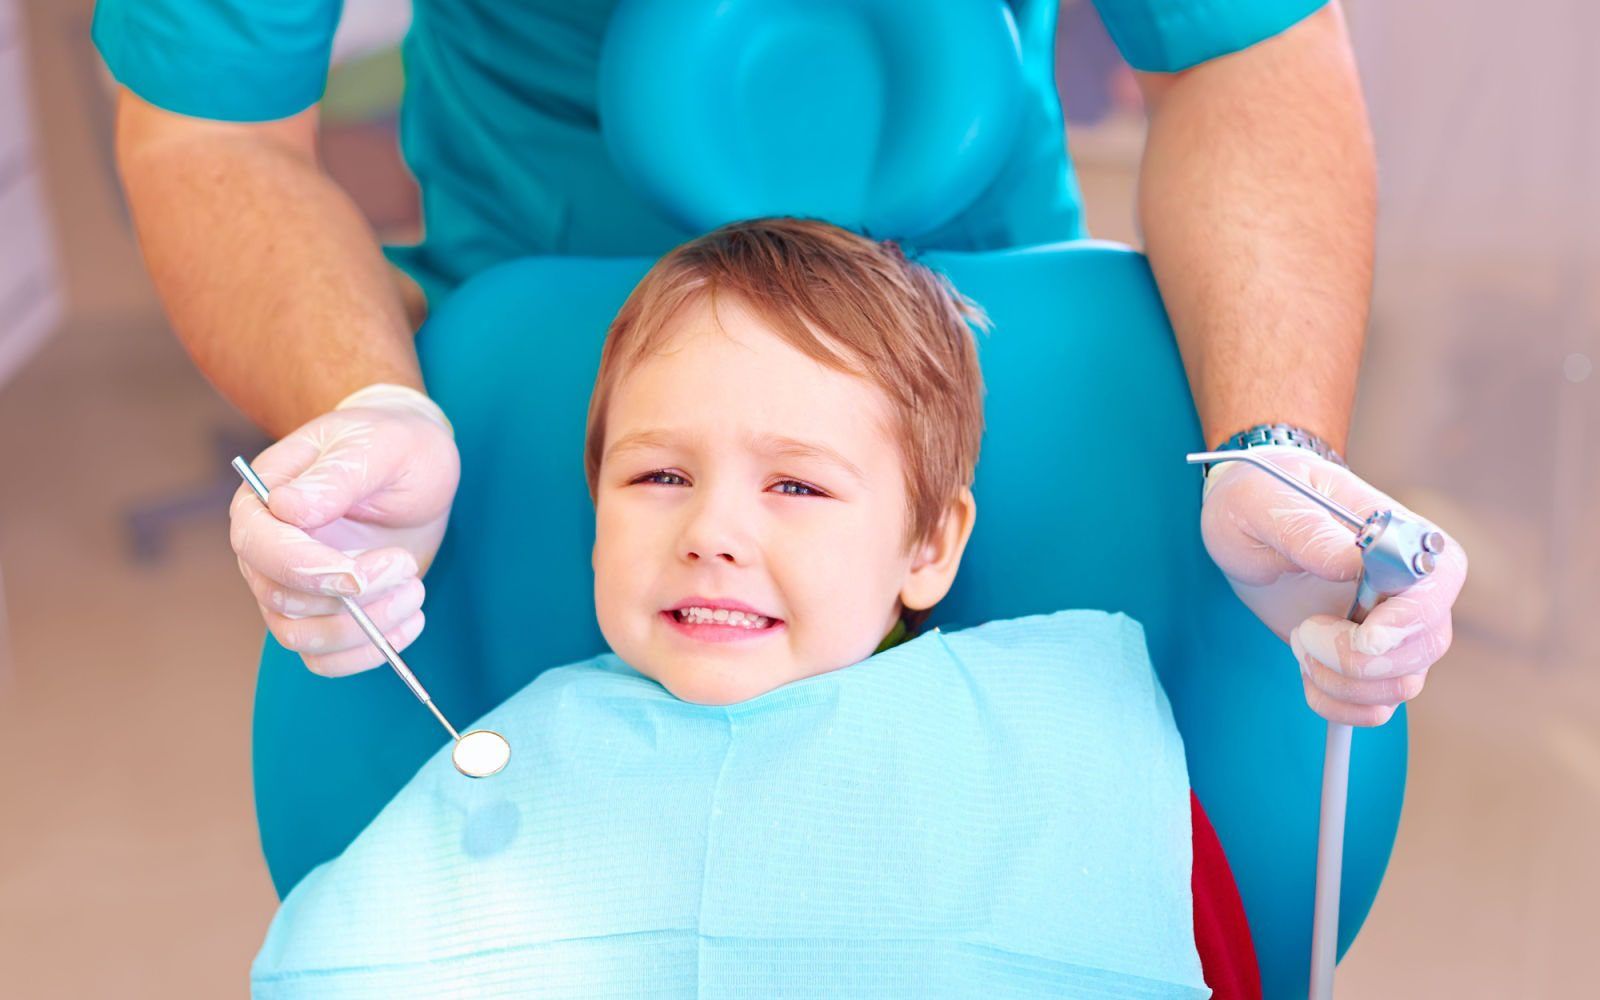 Child Feelijng Nervous in Dentist Office Chair